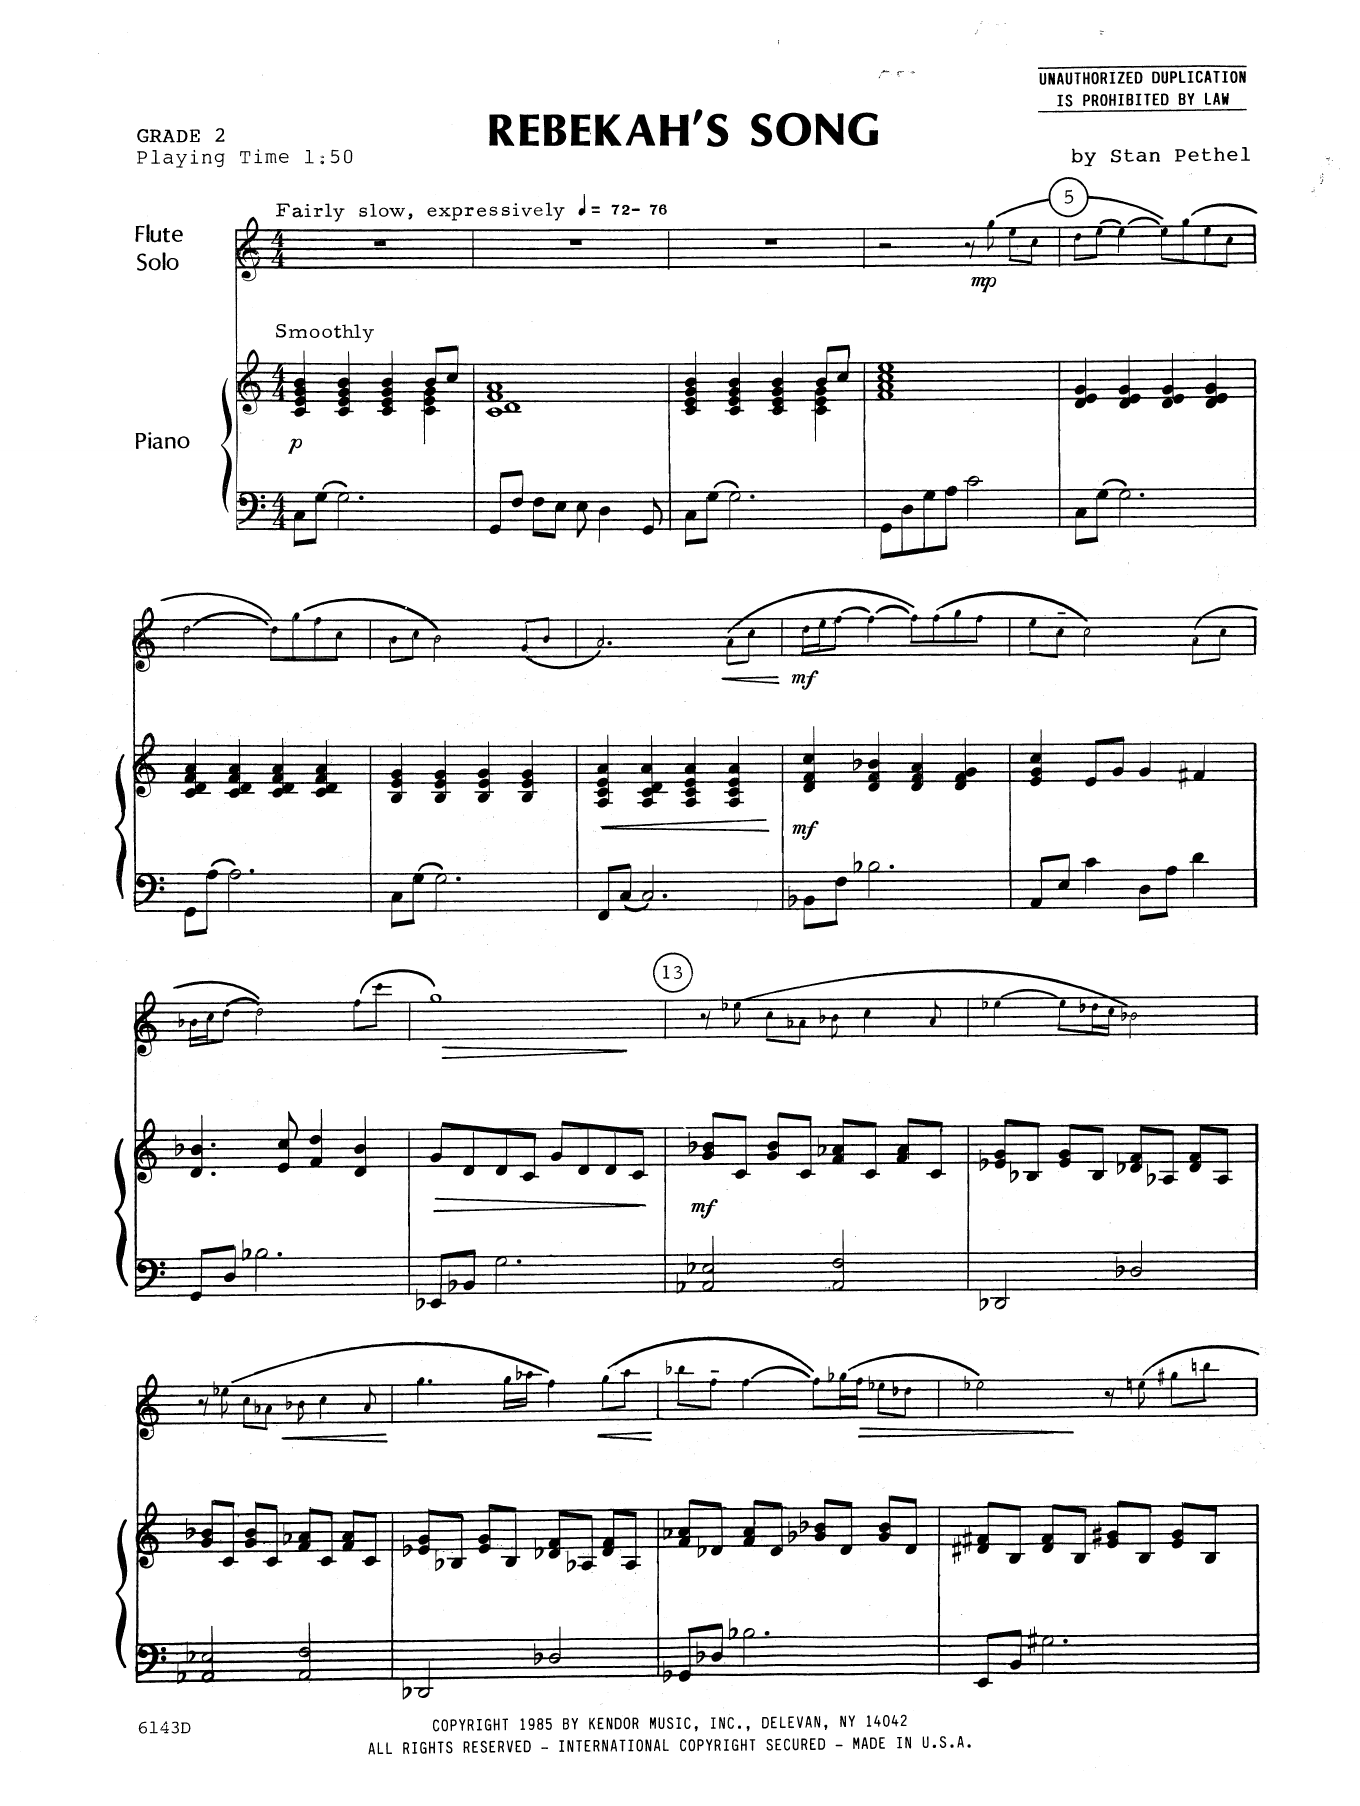 Download Stan Pethel Rebekah's Song - Piano Sheet Music